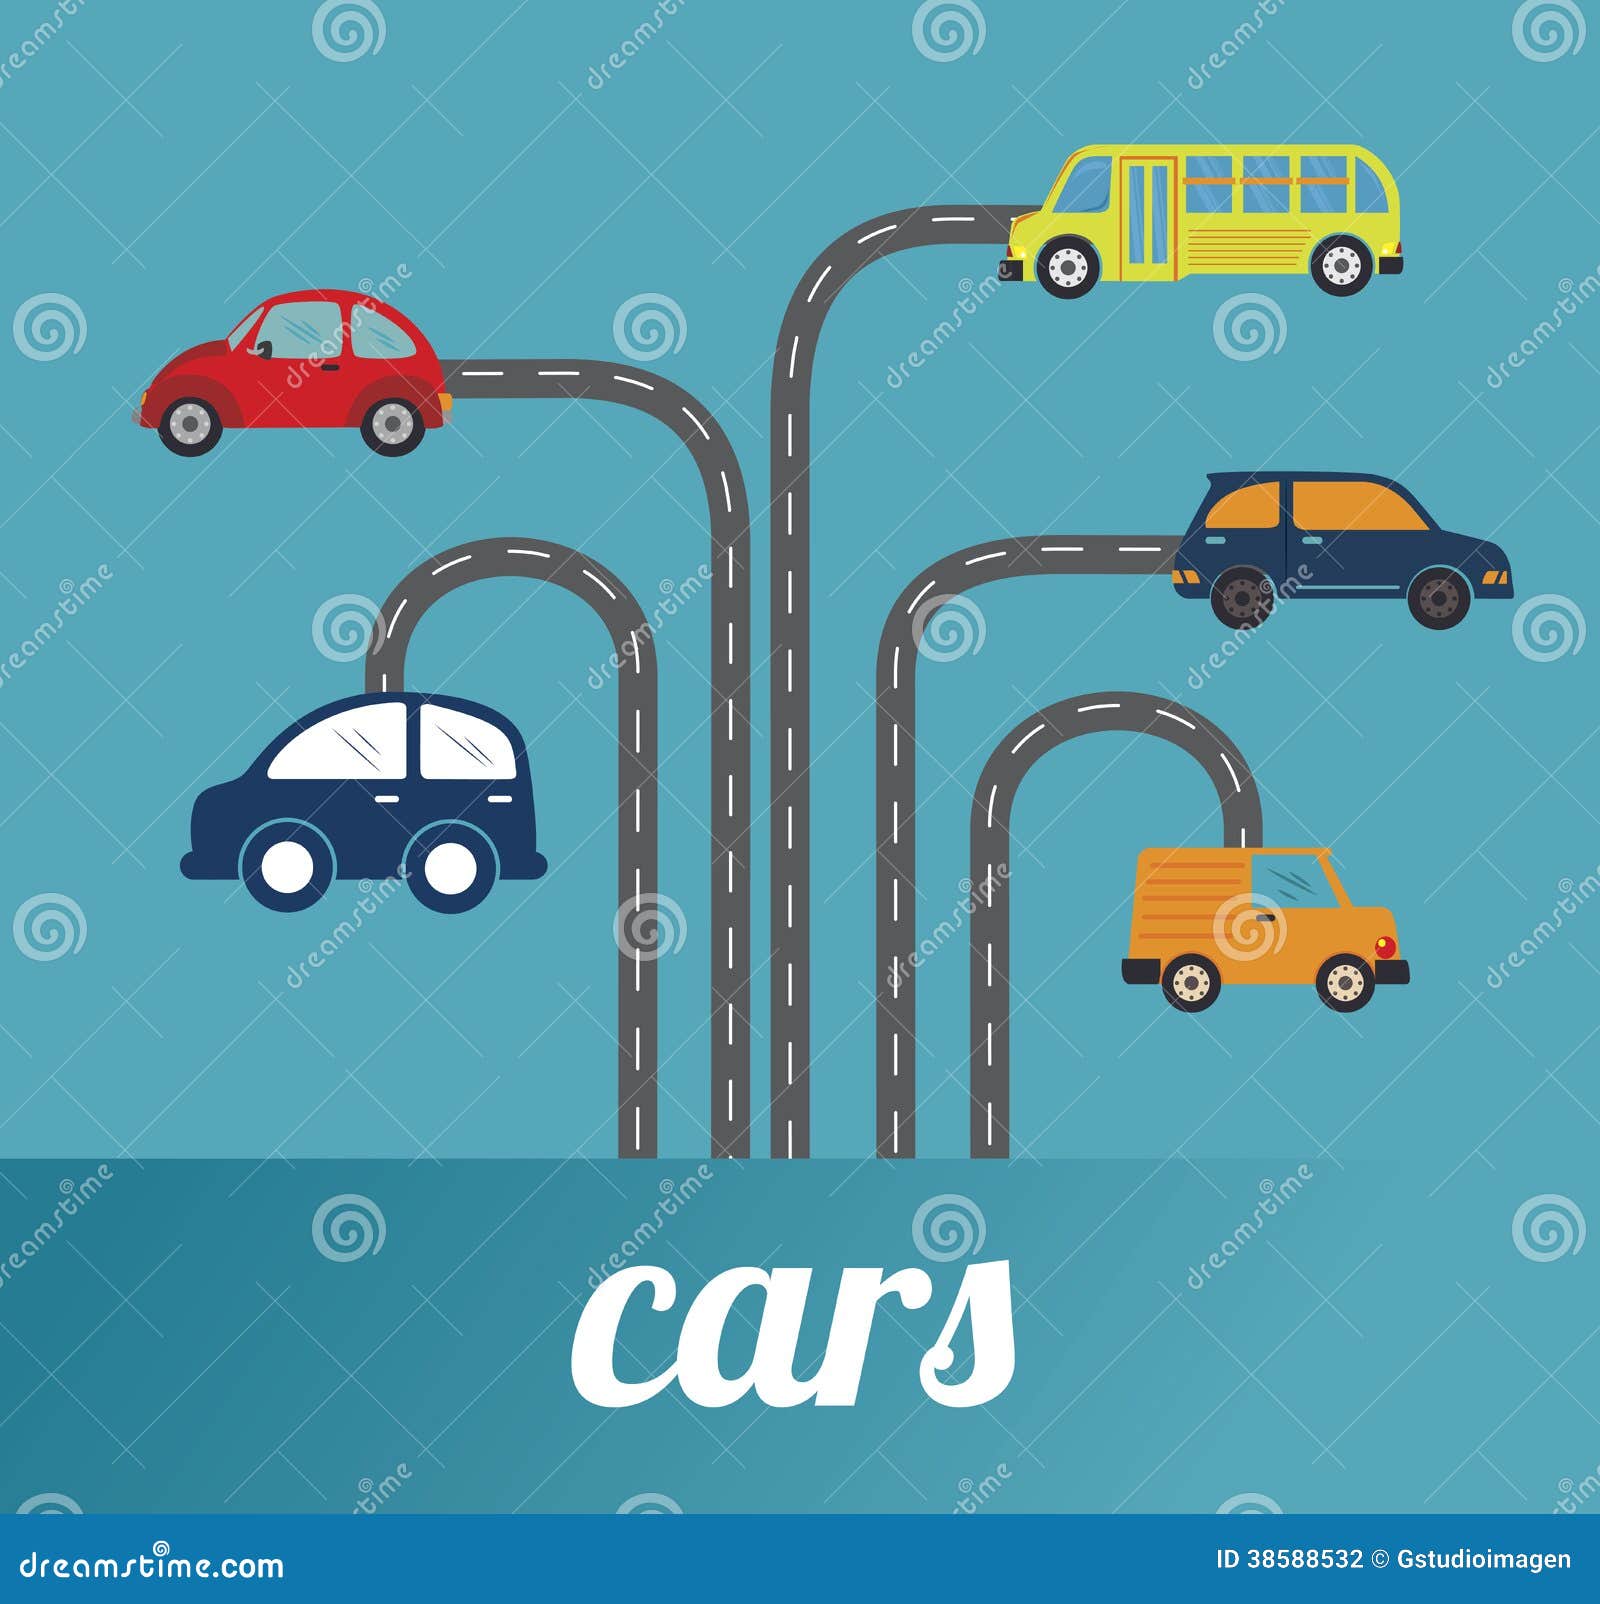 cars 